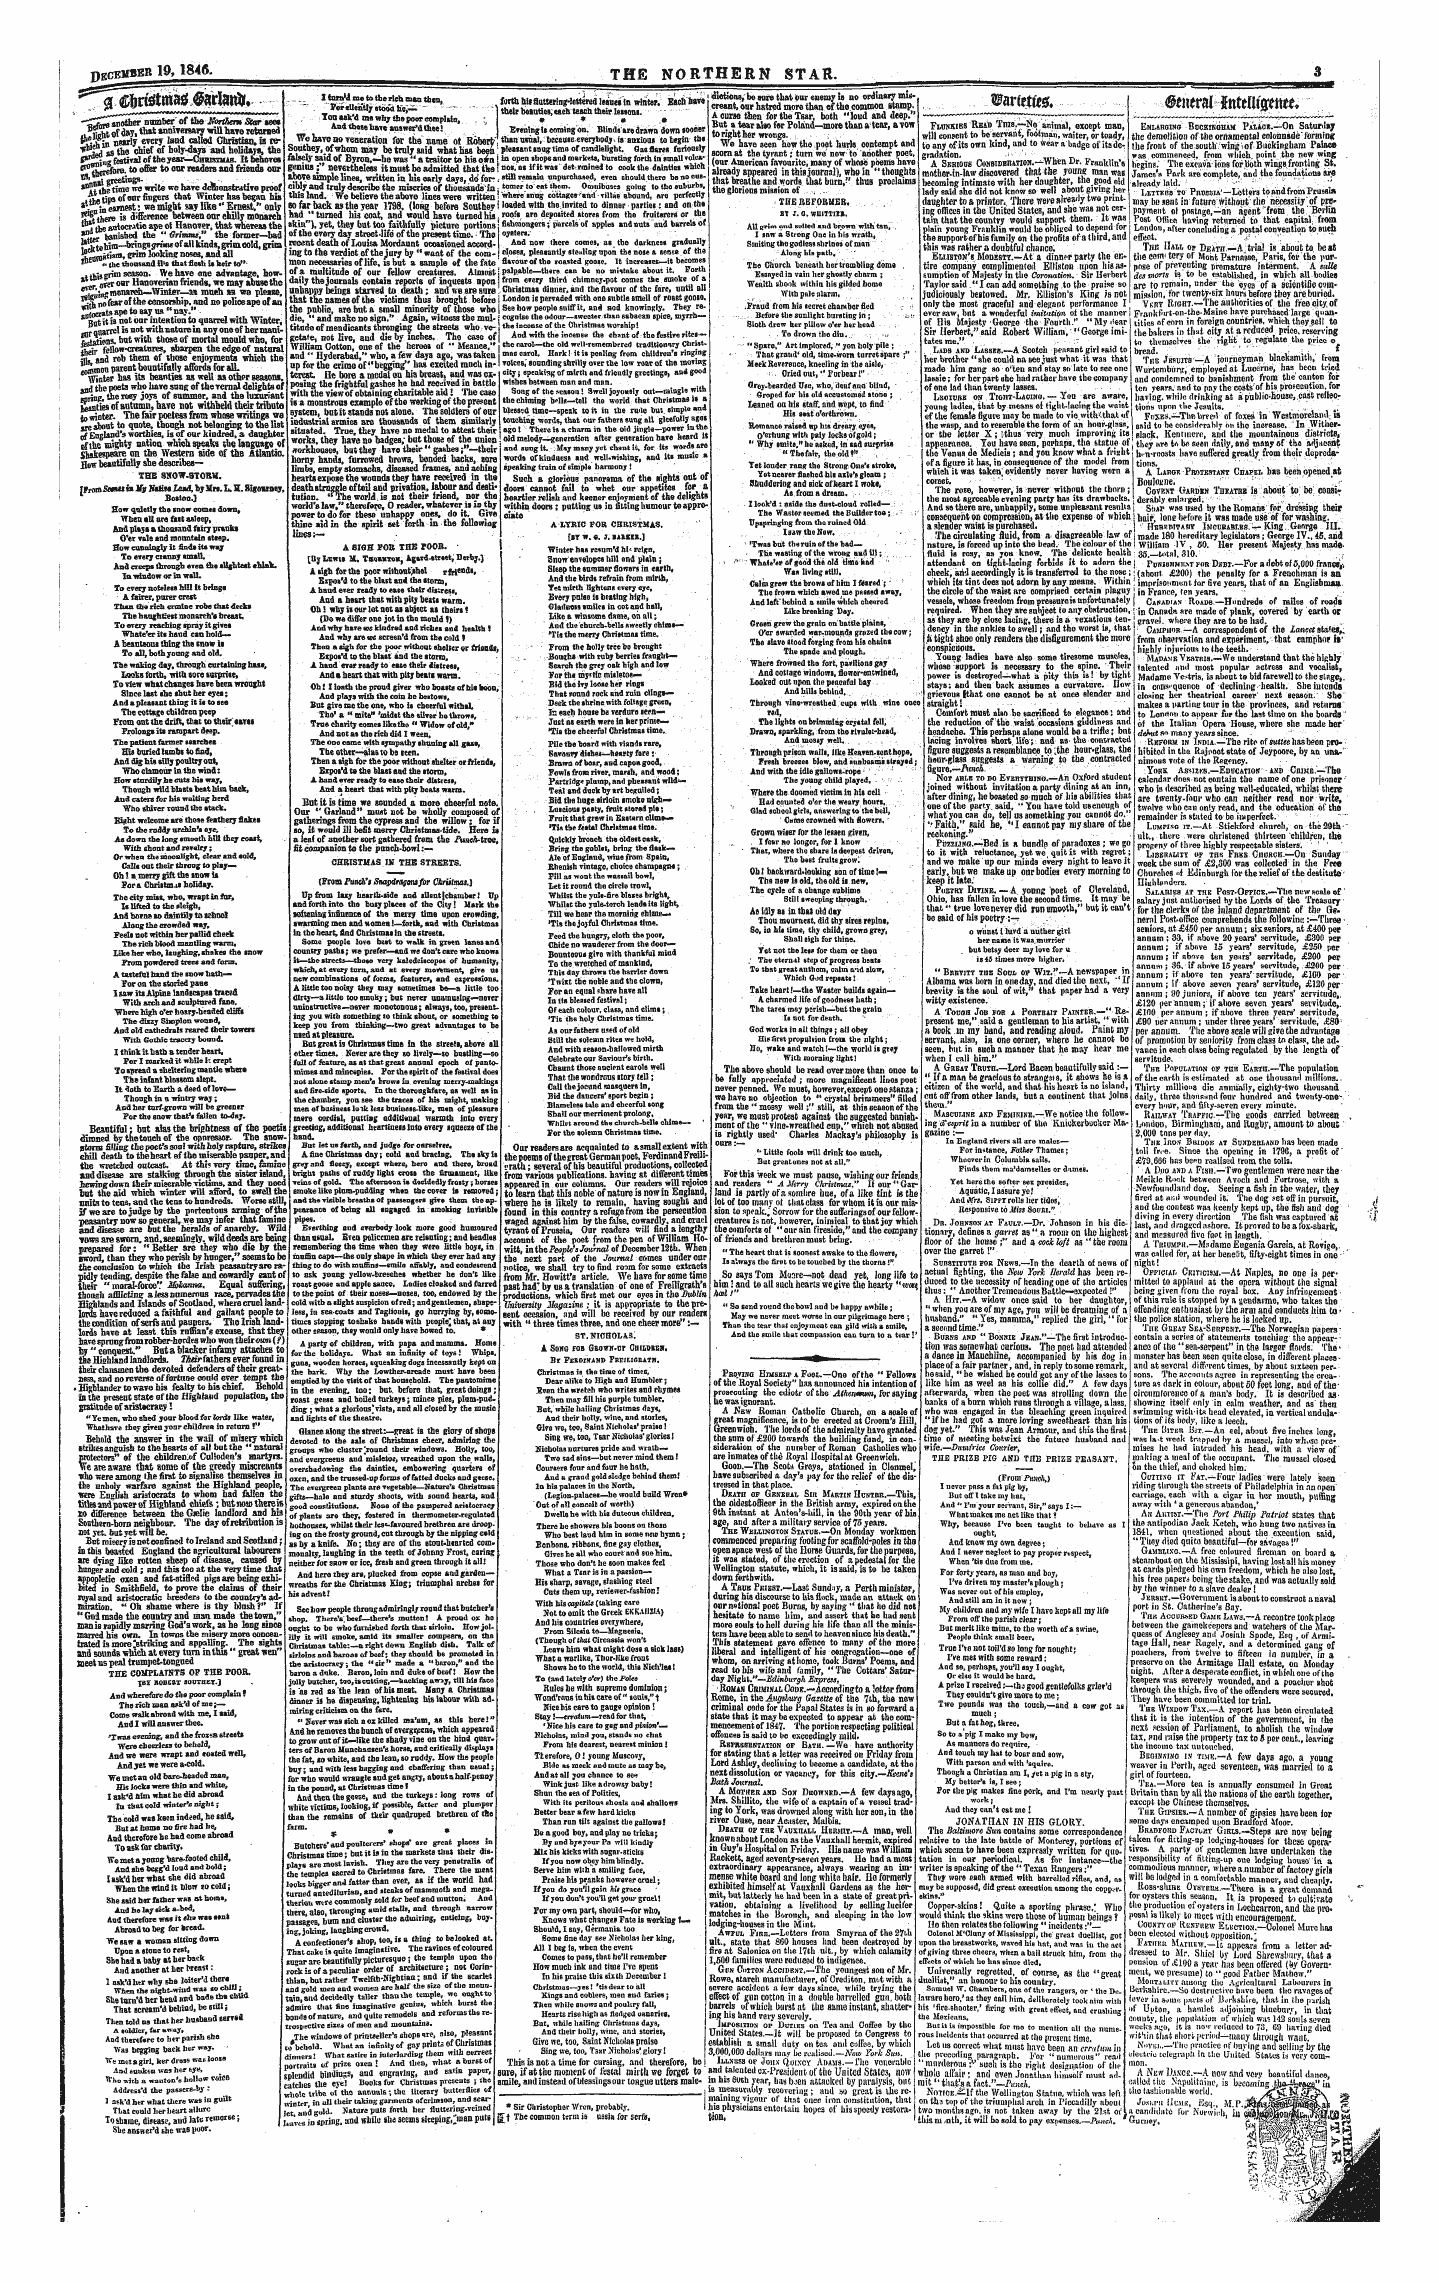 Northern Star (1837-1852): jS F Y, 1st edition - ^ Ijr&Ttttas &Lt;£Arlmrtu ,